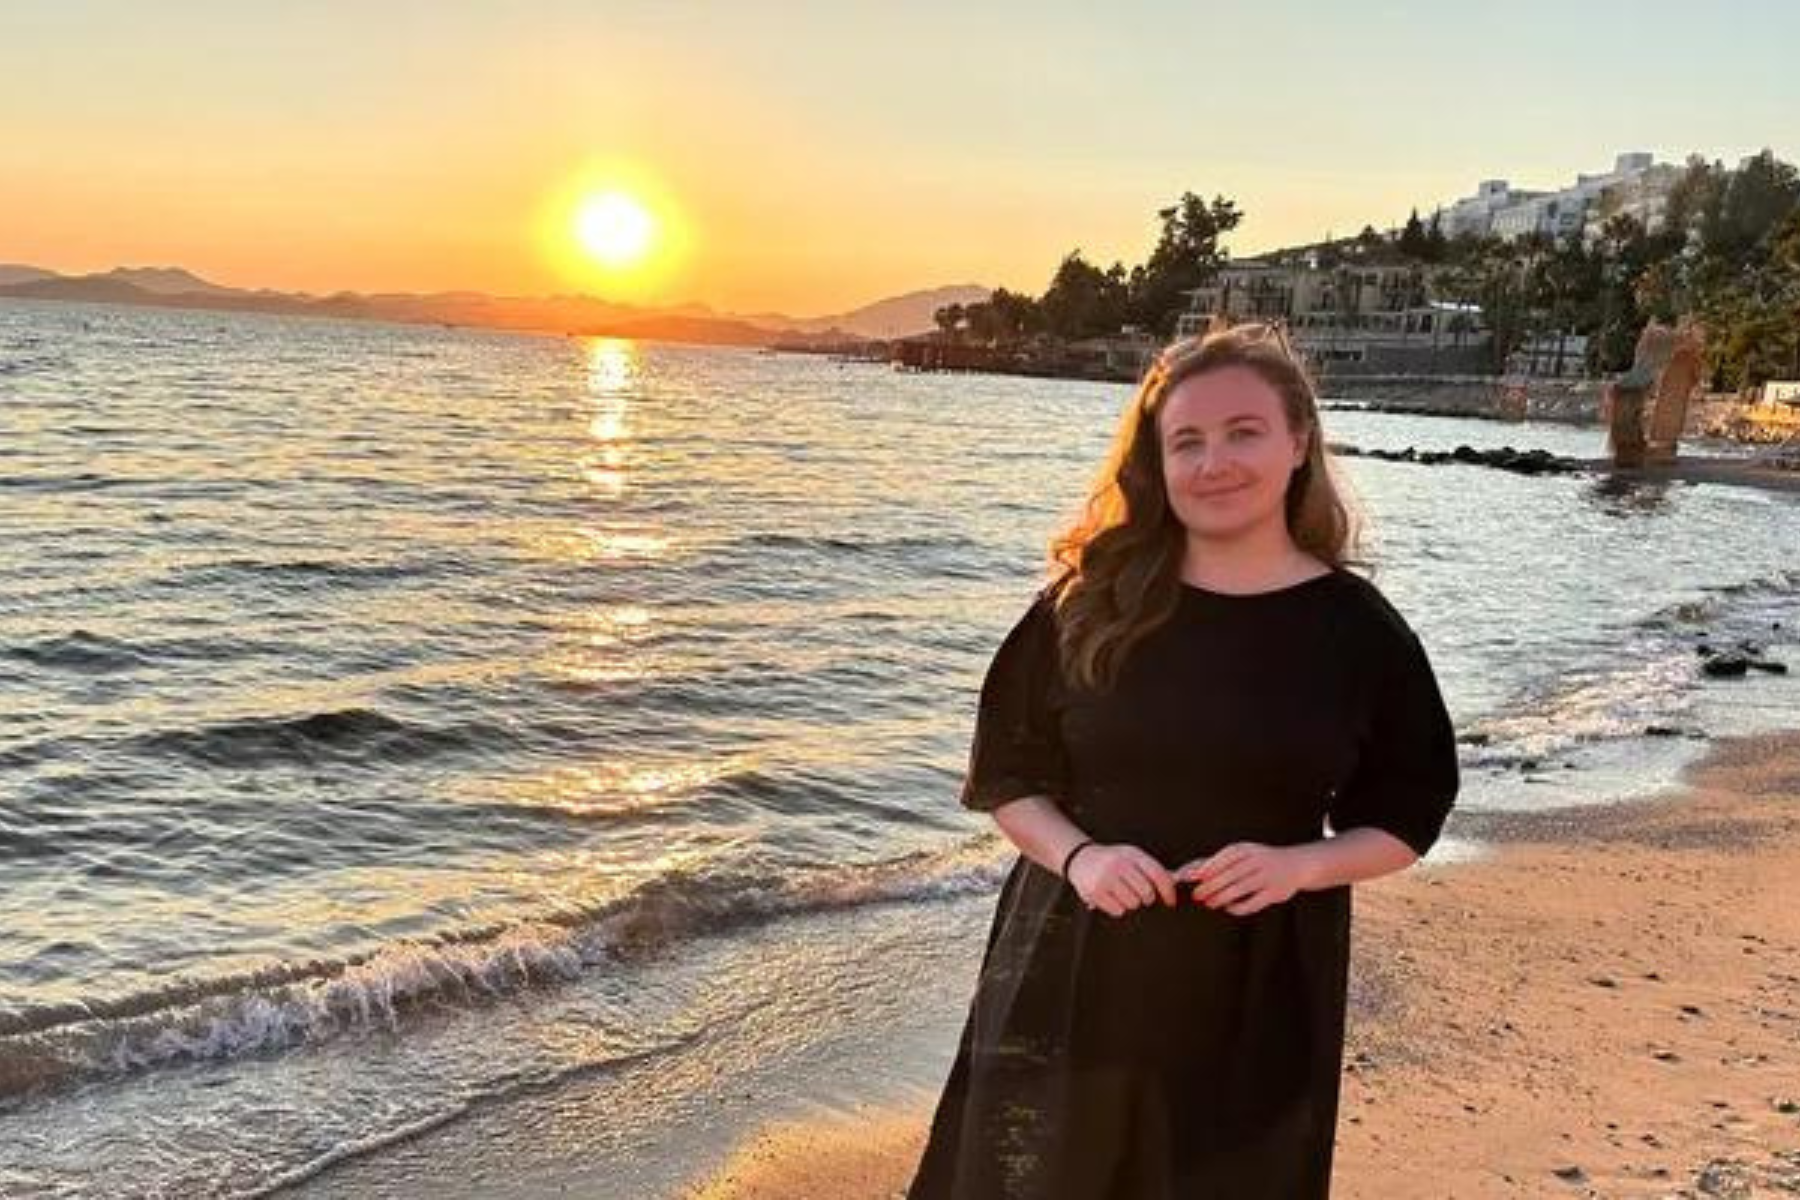 Cheryl Firth next to the sea at sunset, image via GoFundMe